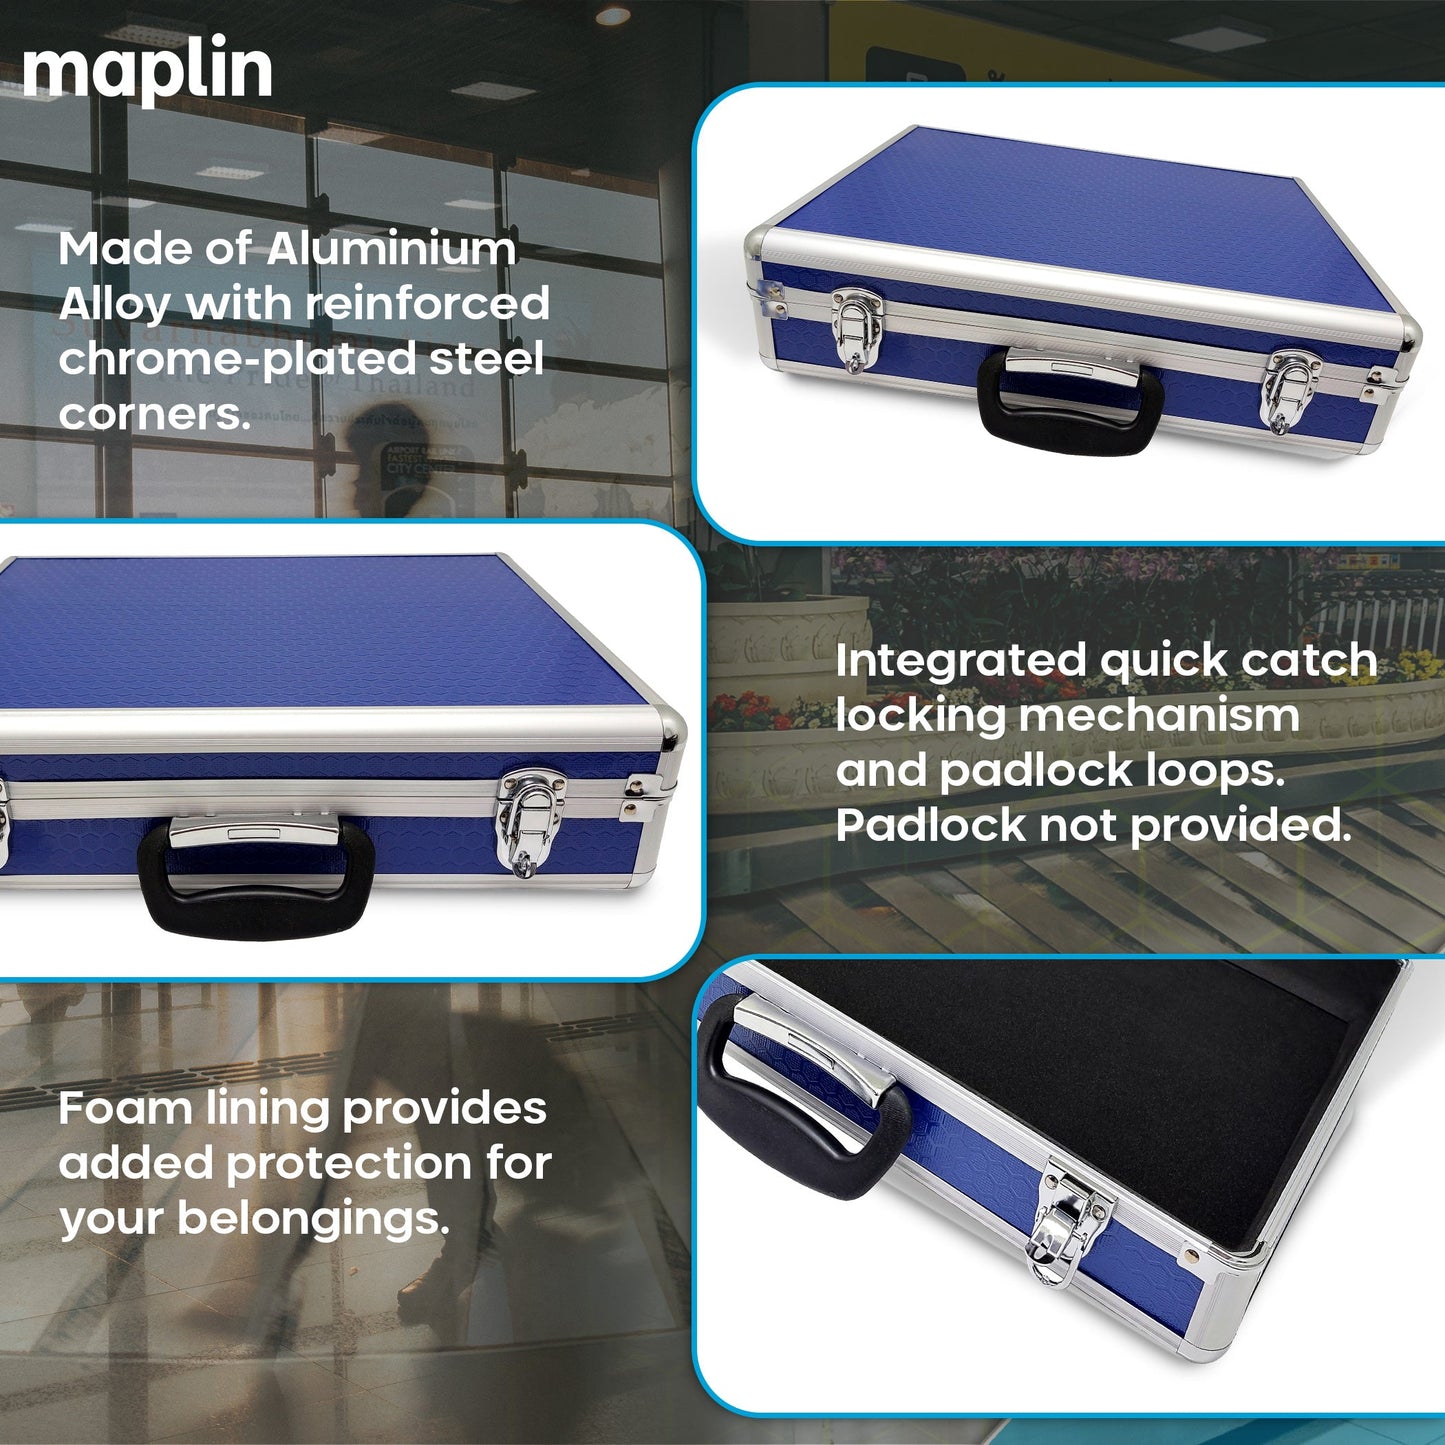 Maplin Plus Aluminium 115 x 460 x 340mm Flight Case - Blue - maplin.co.uk